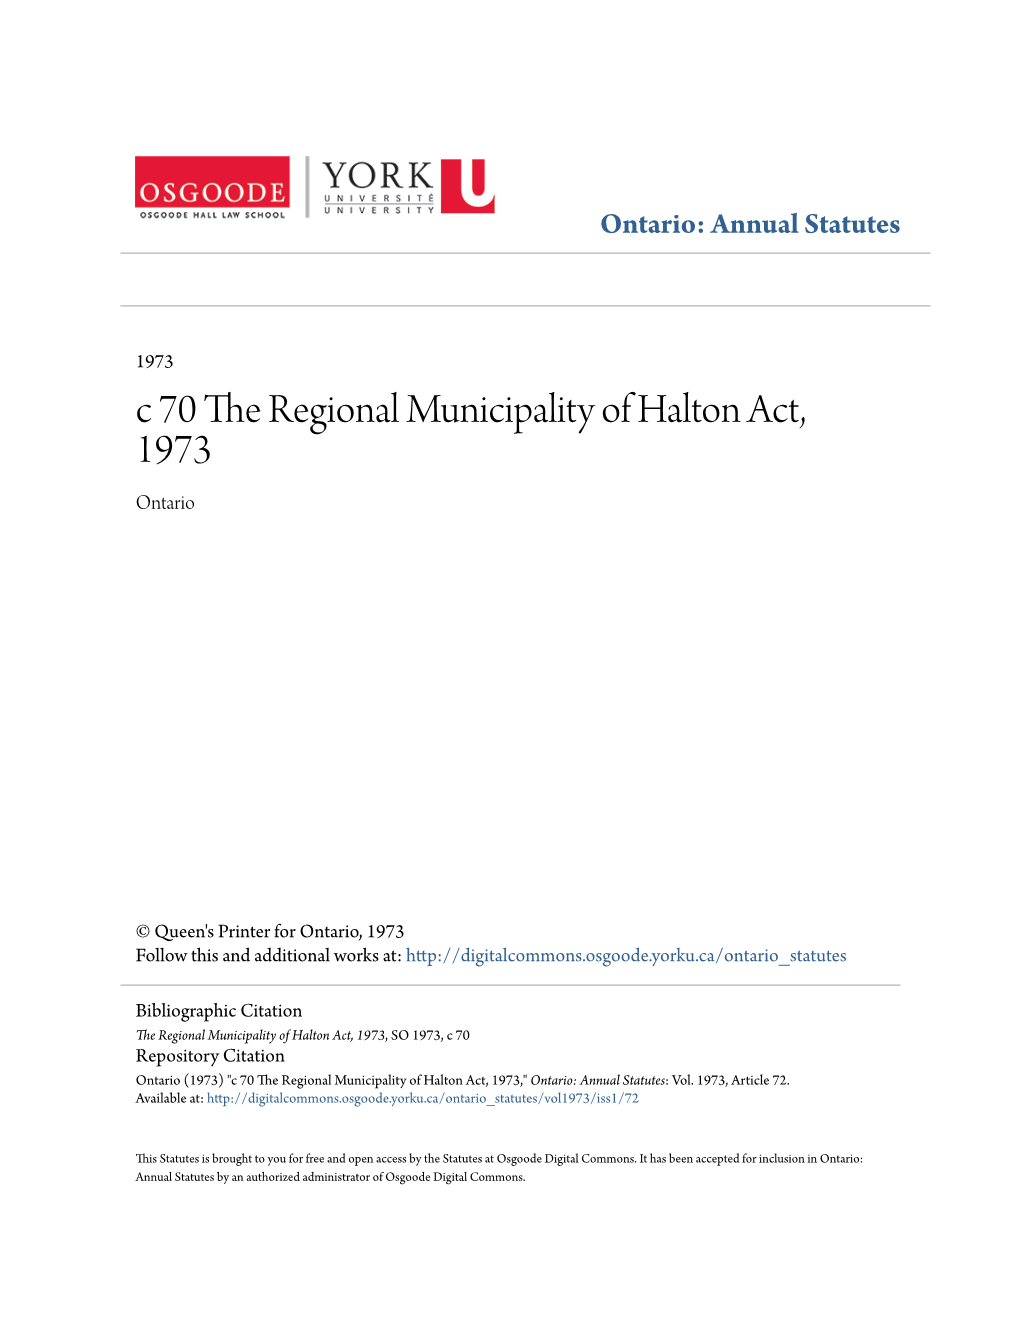 C 70 the Regional Municipality of Halton Act, 1973 Ontario